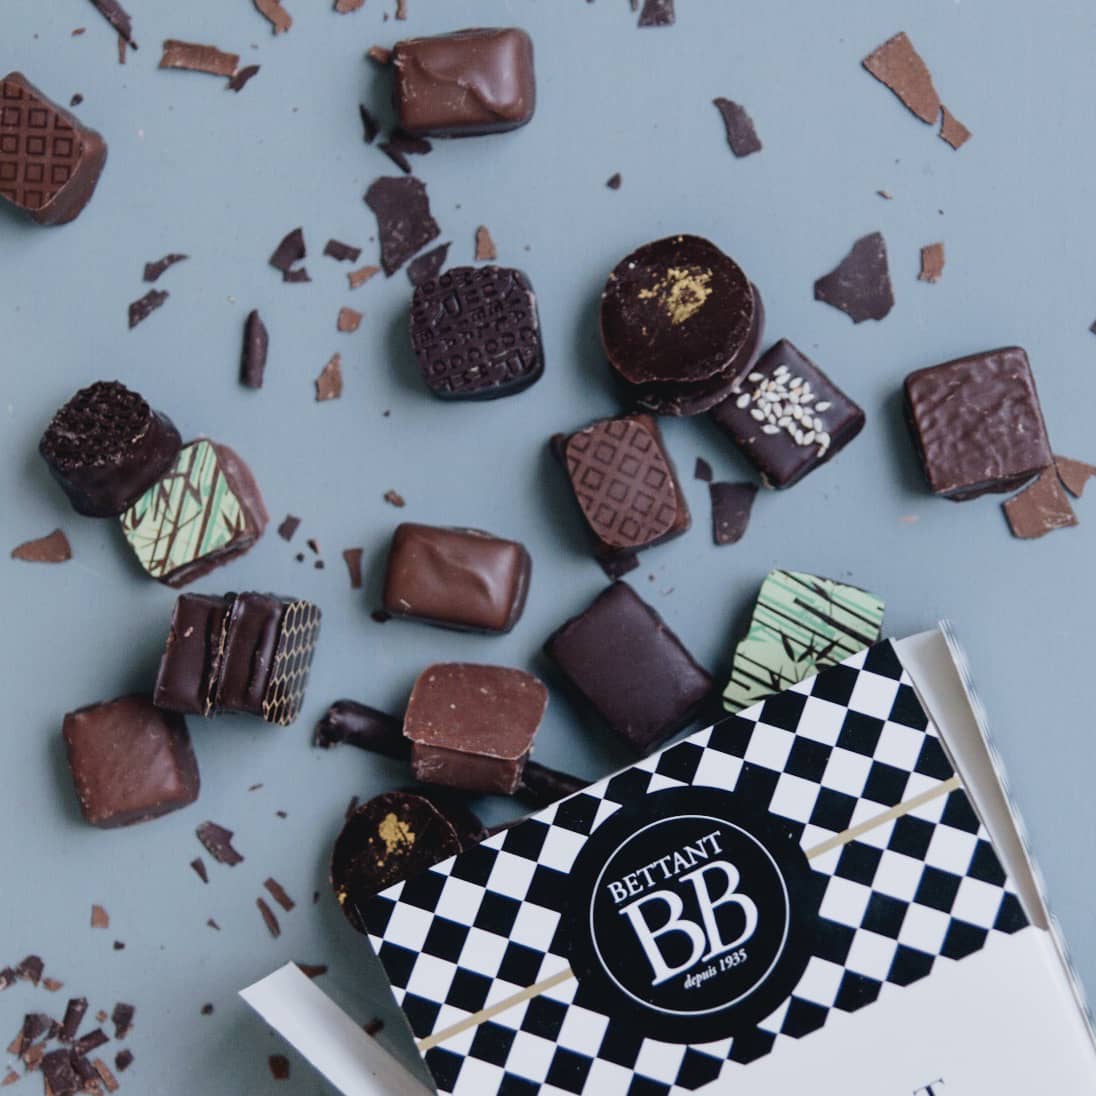 Ballotin chocolat noir - 250g - Histoire de Chocolat